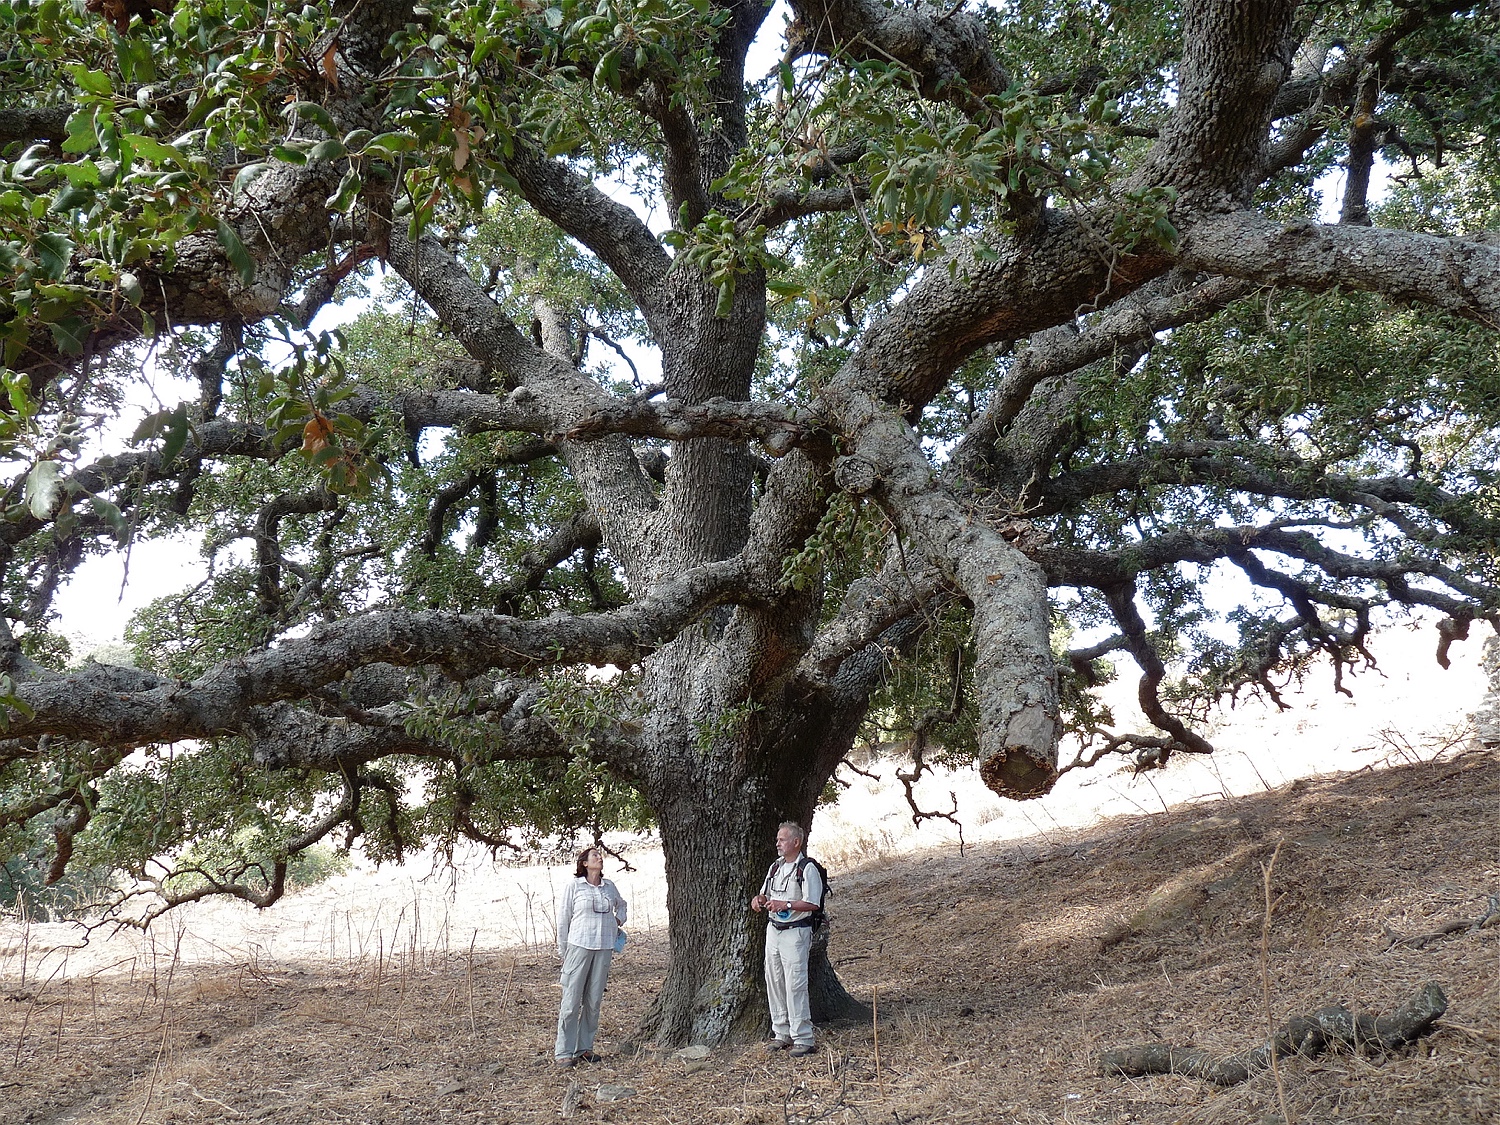 Walloneneiche, Quercus ithaburensis ssp. macrolepis